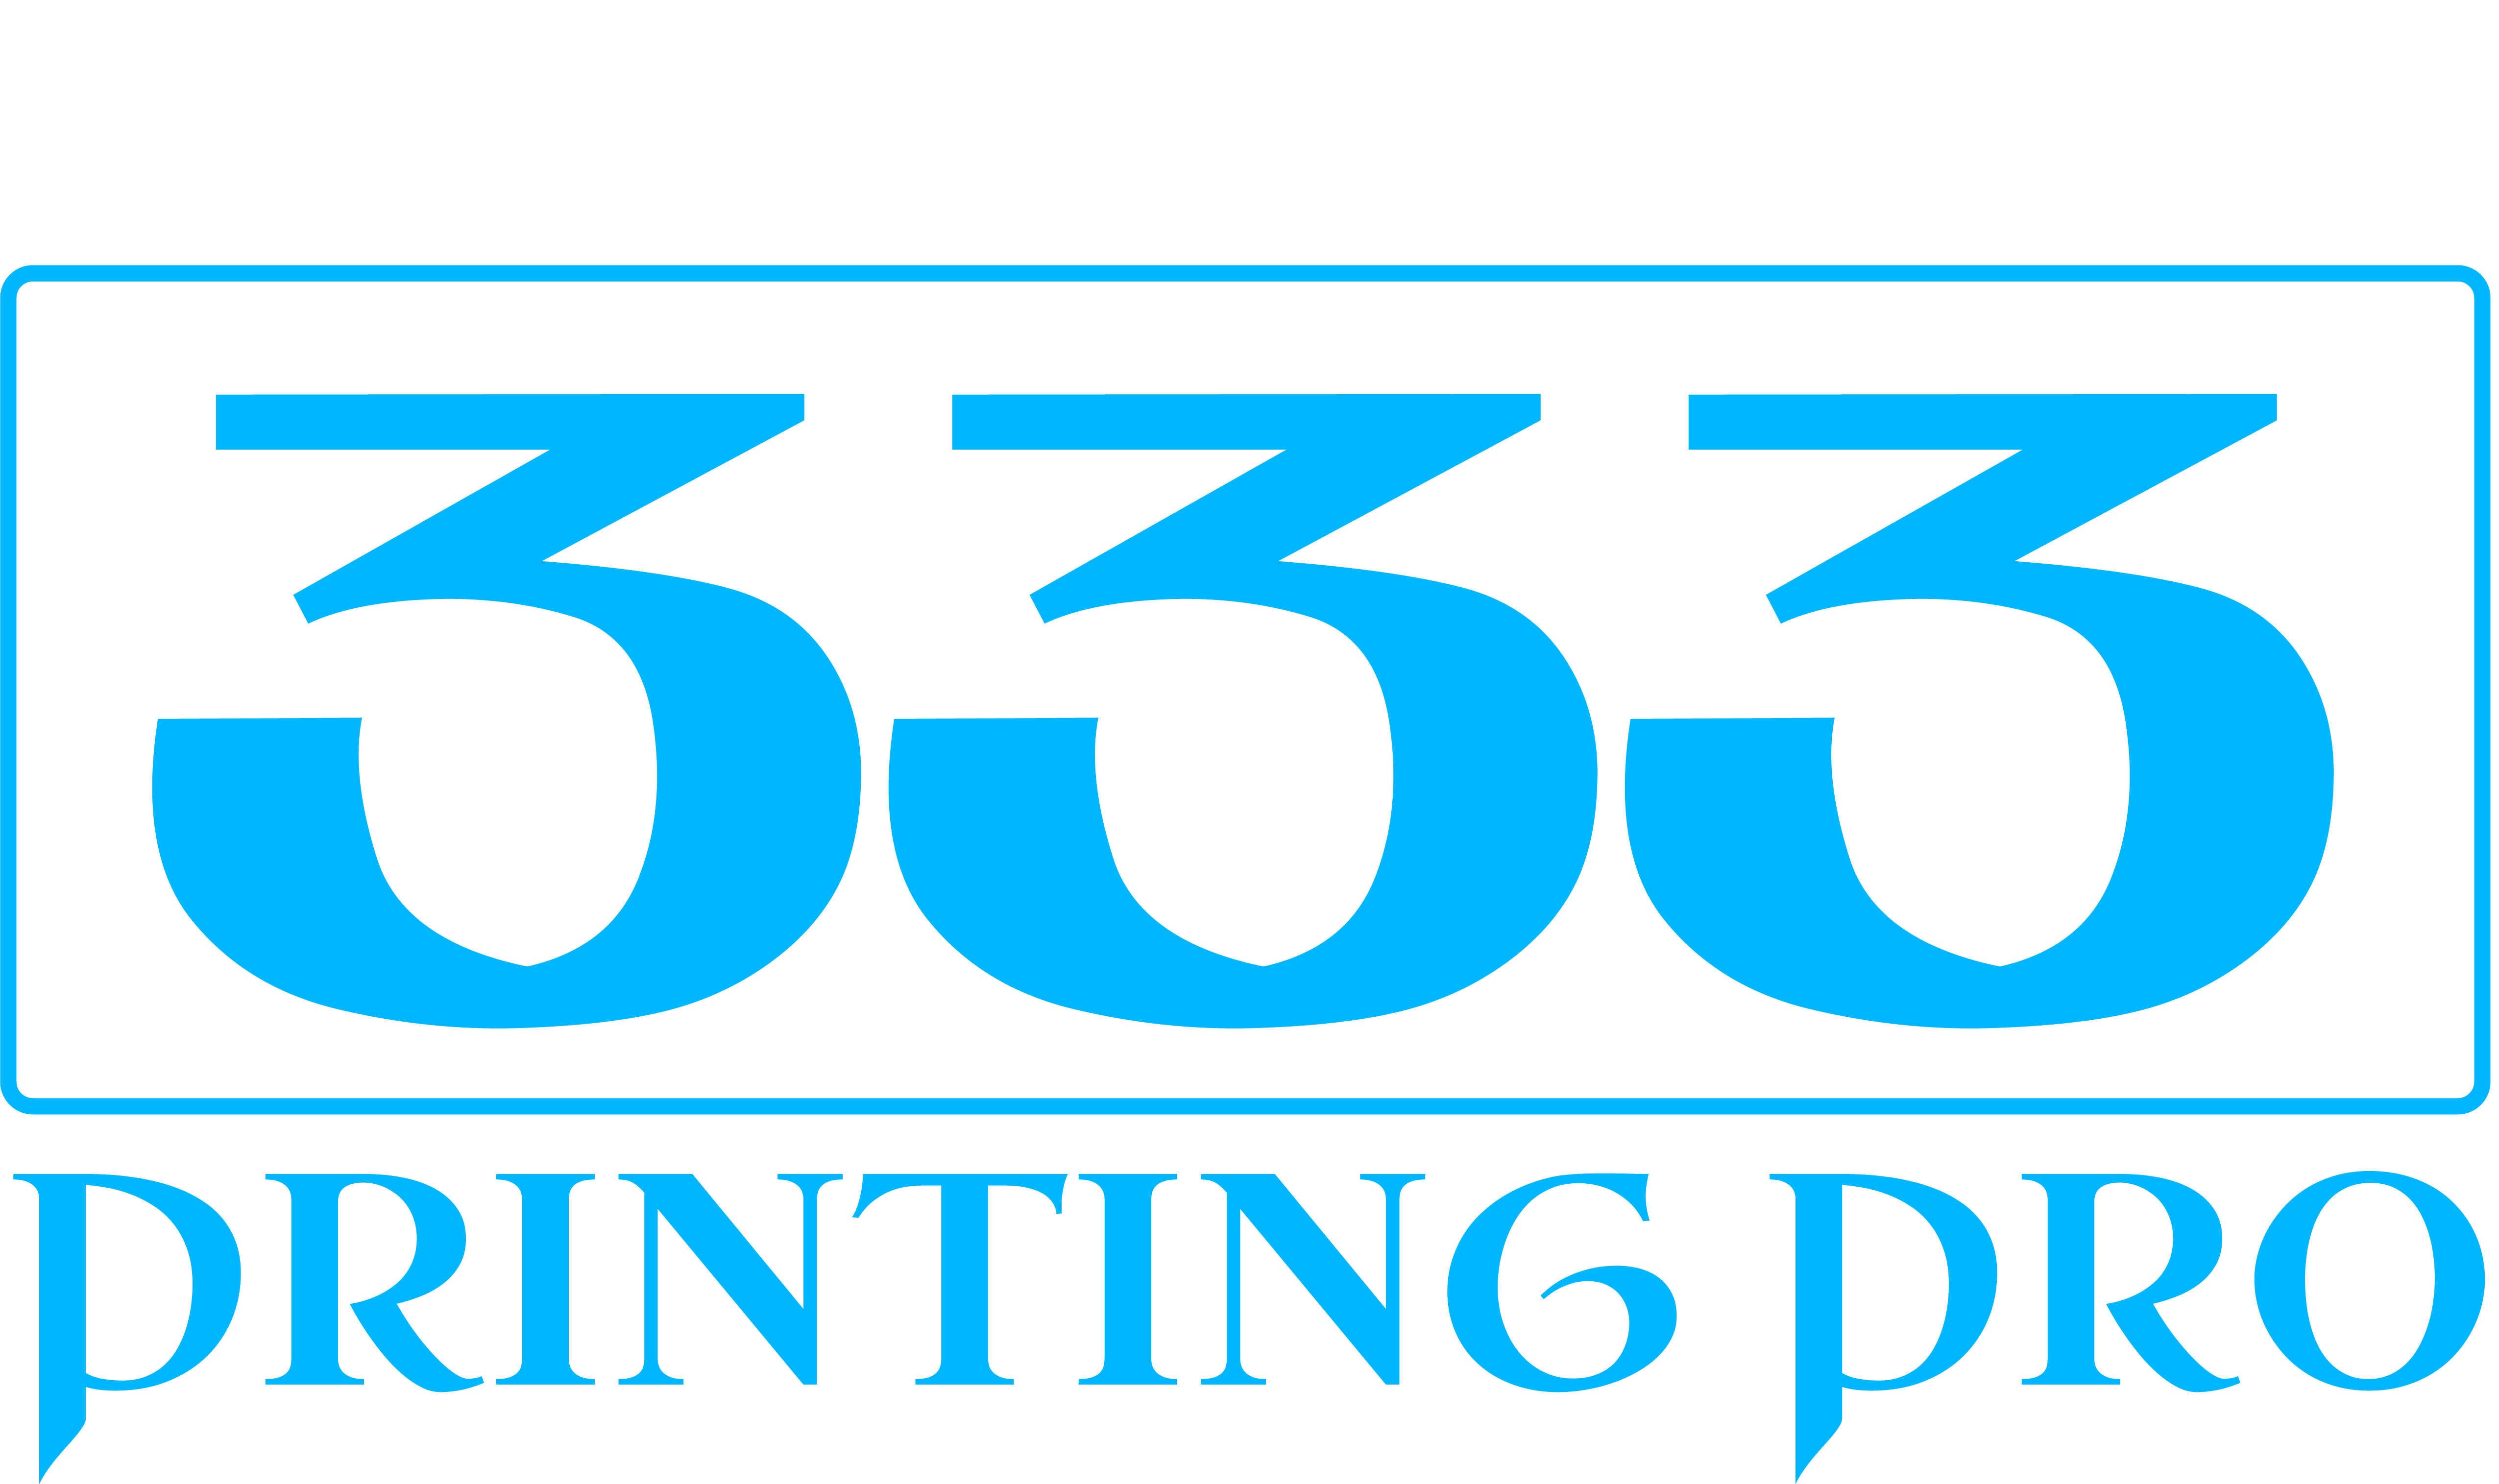 333 Printing Pro